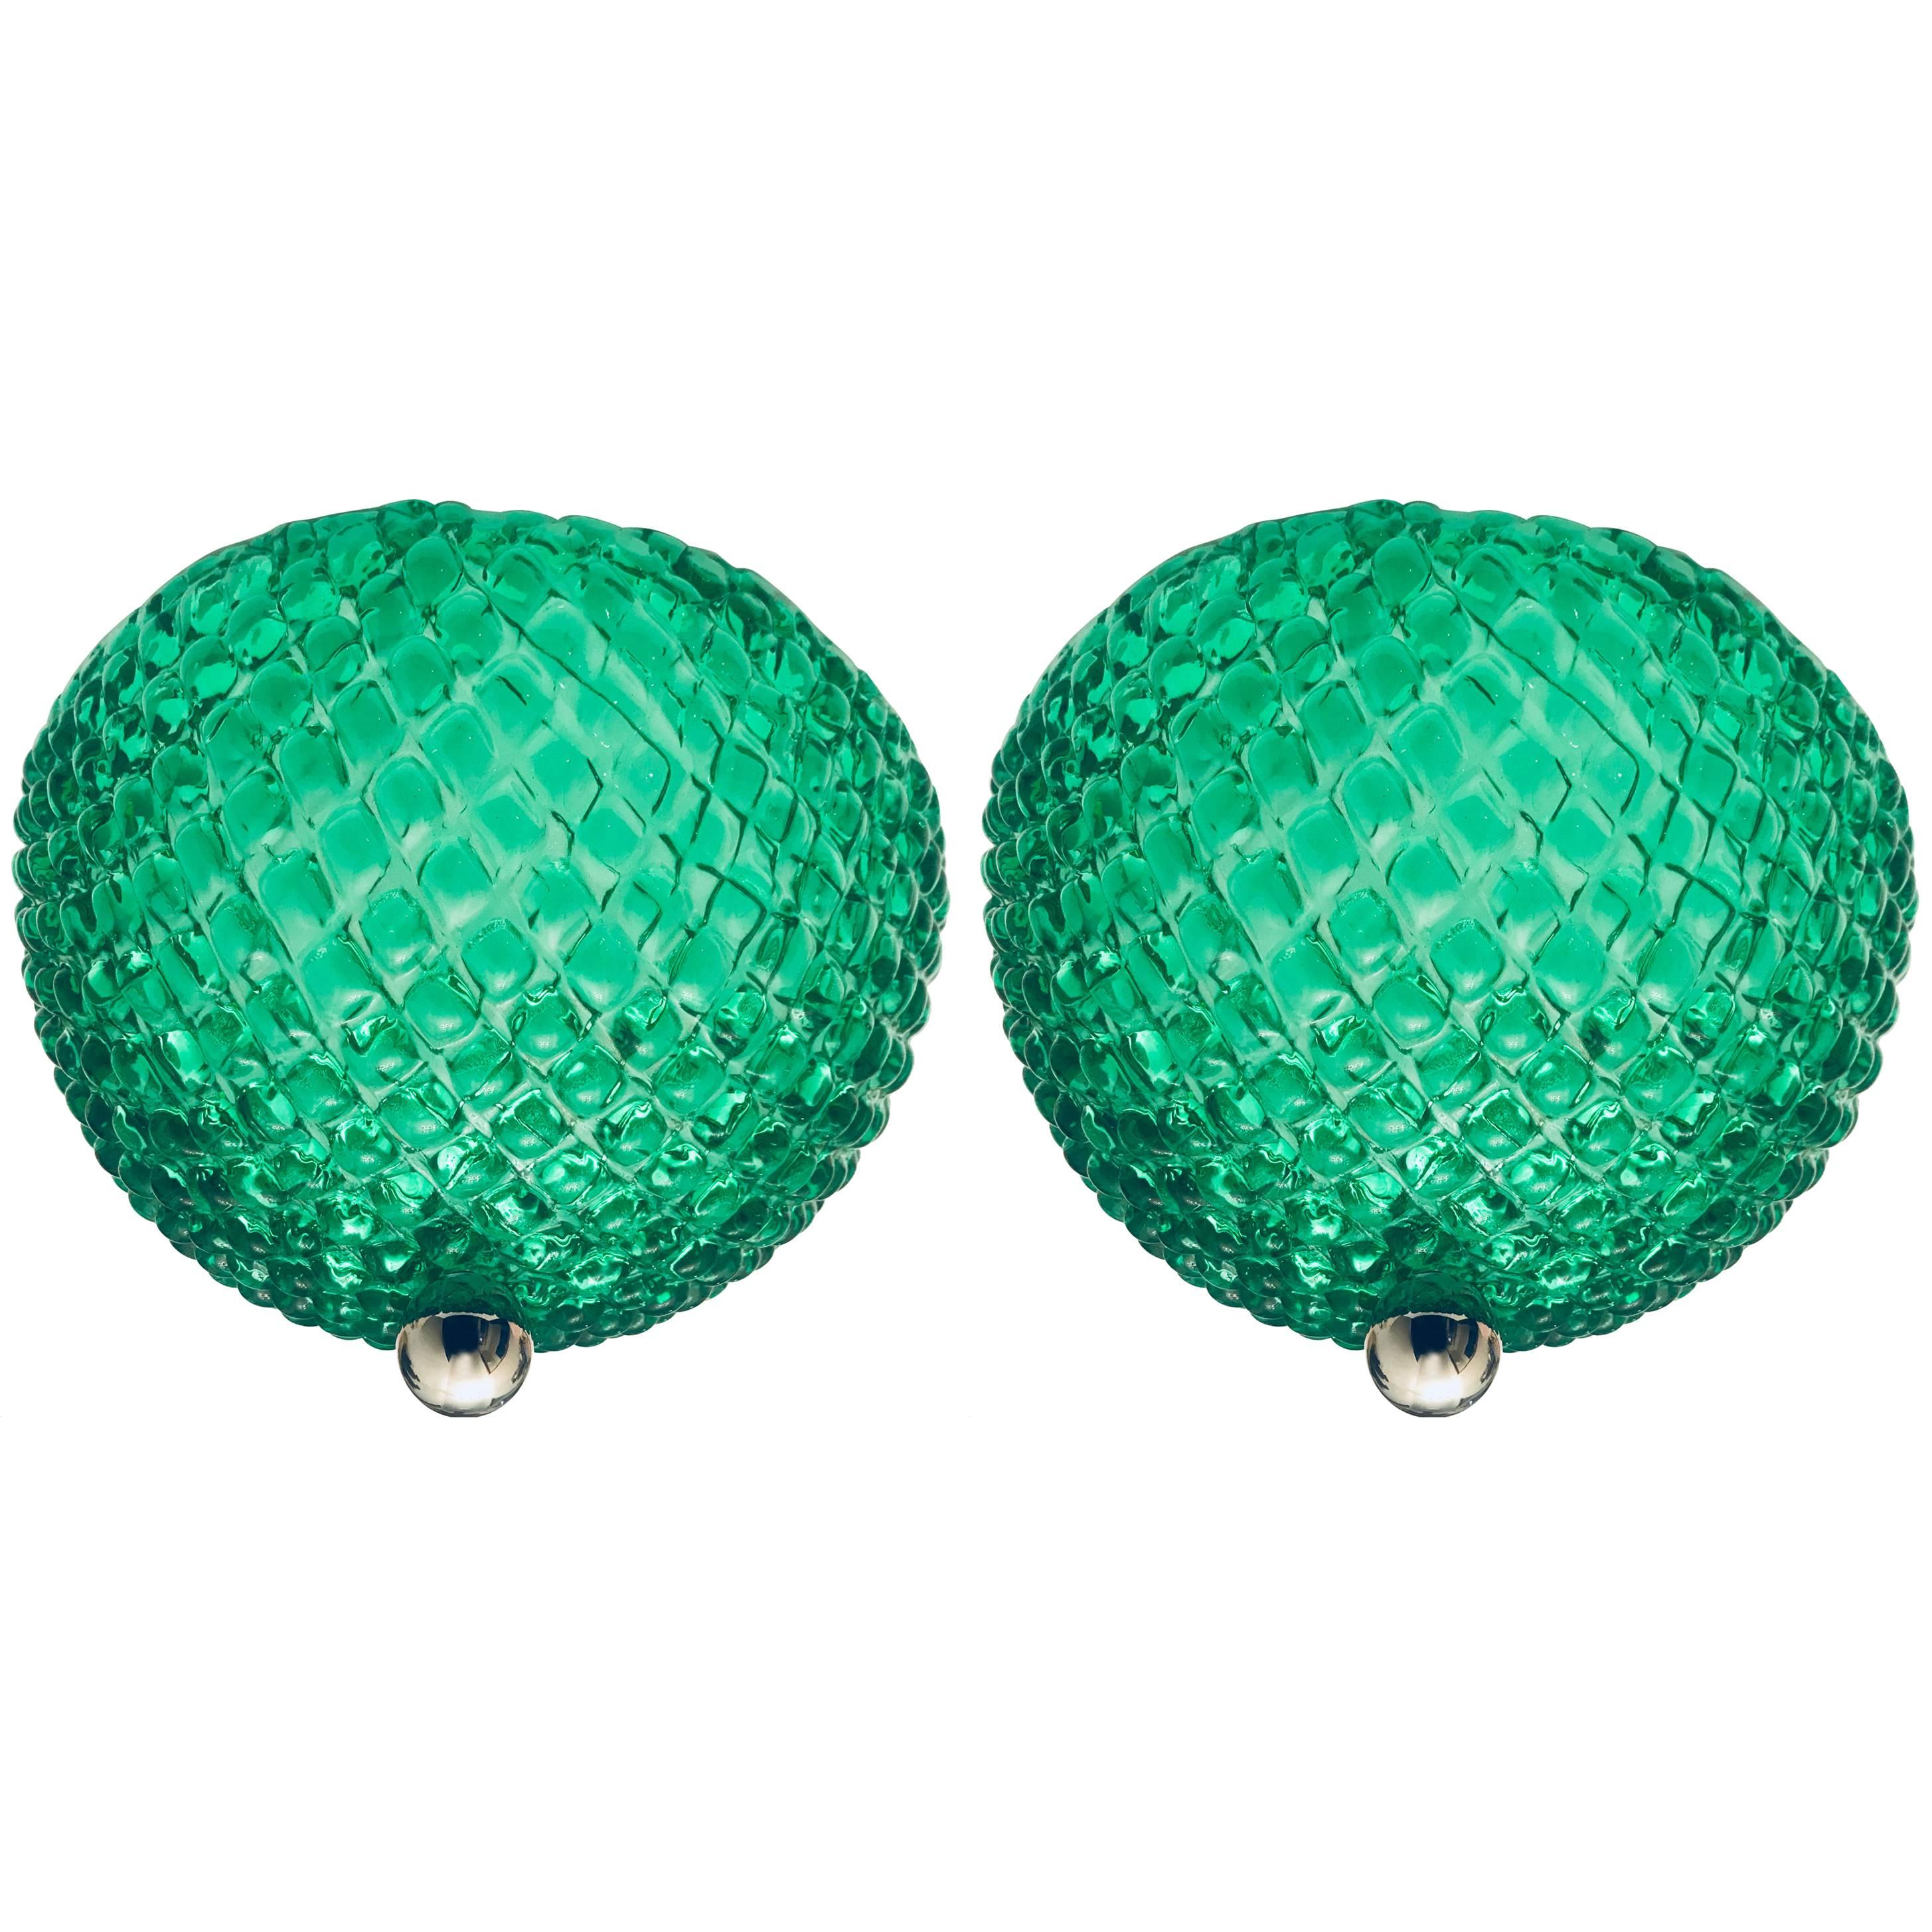 Pair of 1960s Murano Glass Emerald Green Flush Ceiling Lights